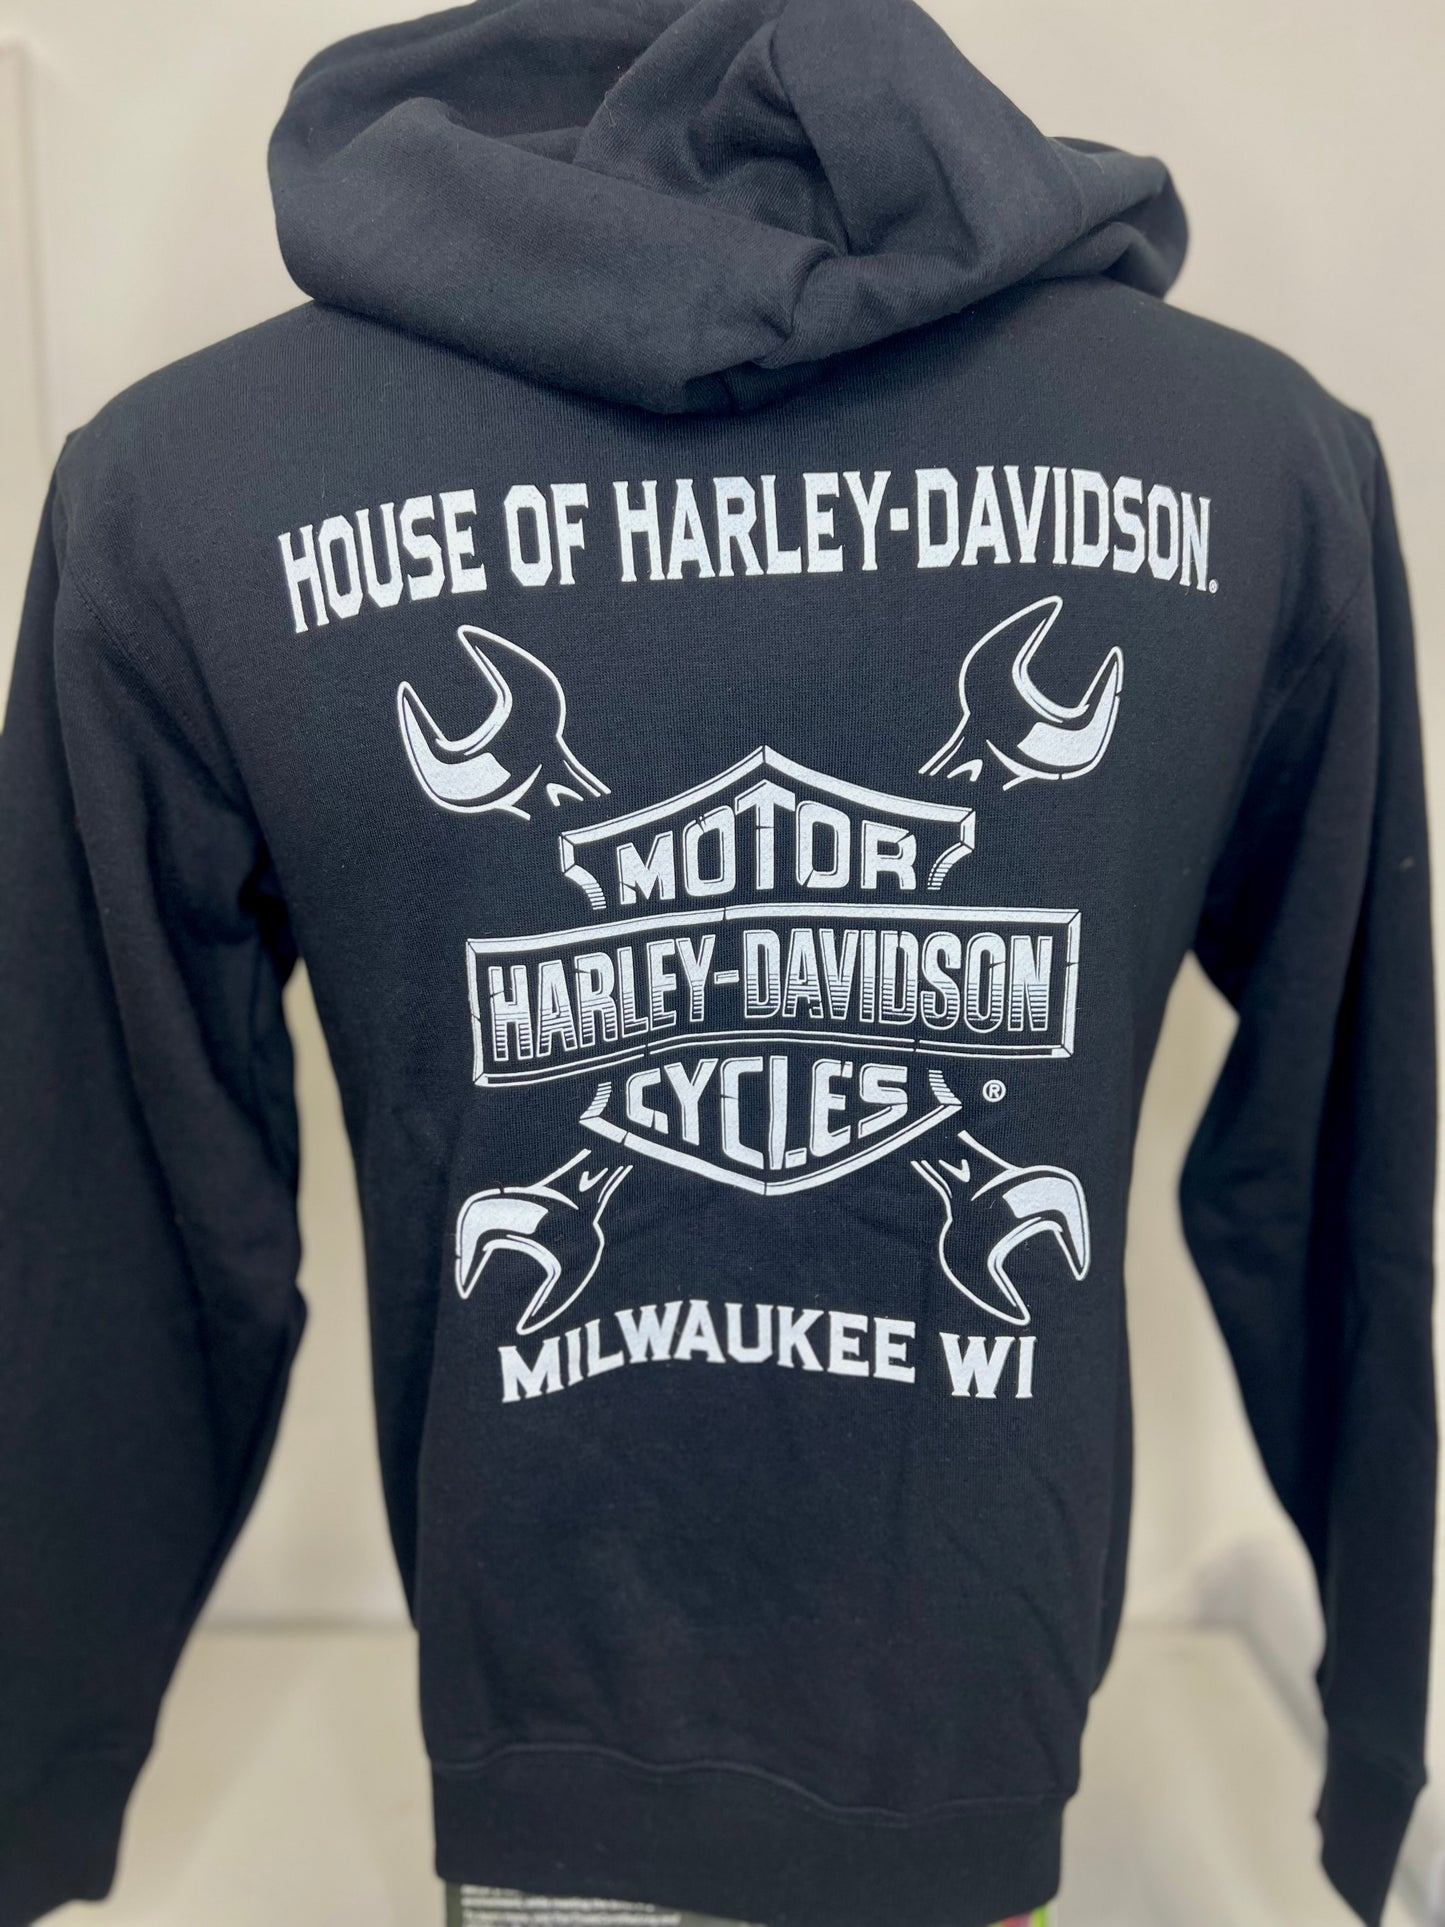  Harley Davidson Sweatshirts For Men